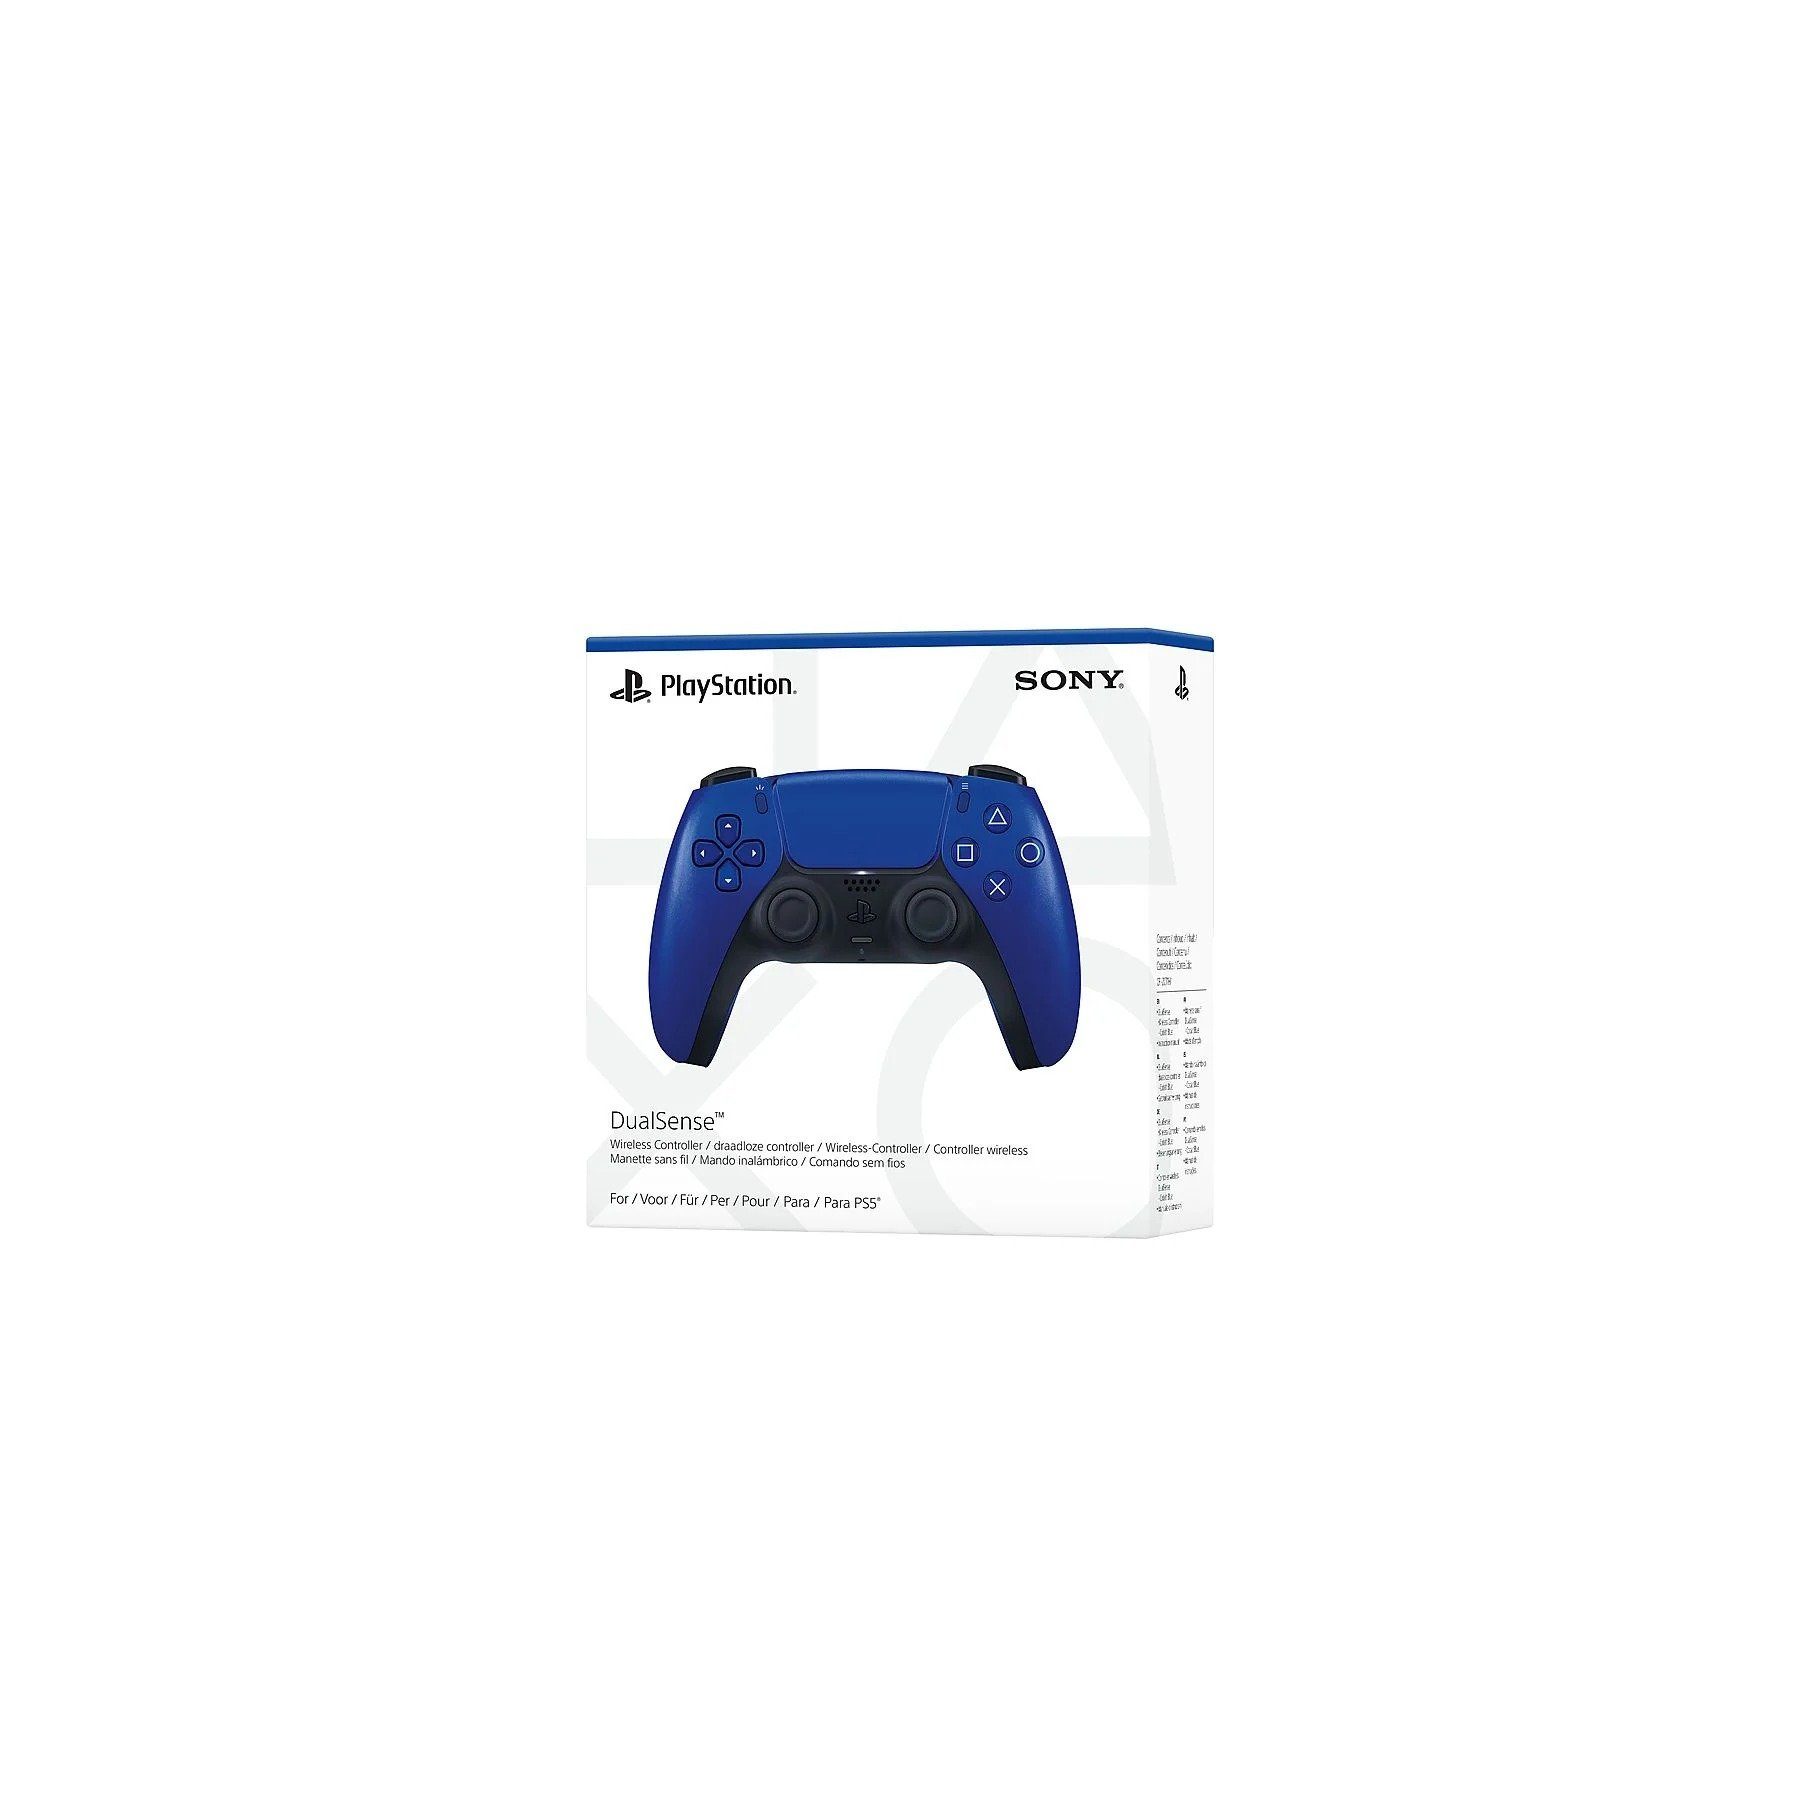 Sony Controller Playstation Cobalt Blue Original PlayStation 5 Wireless 5-Controller DualSense